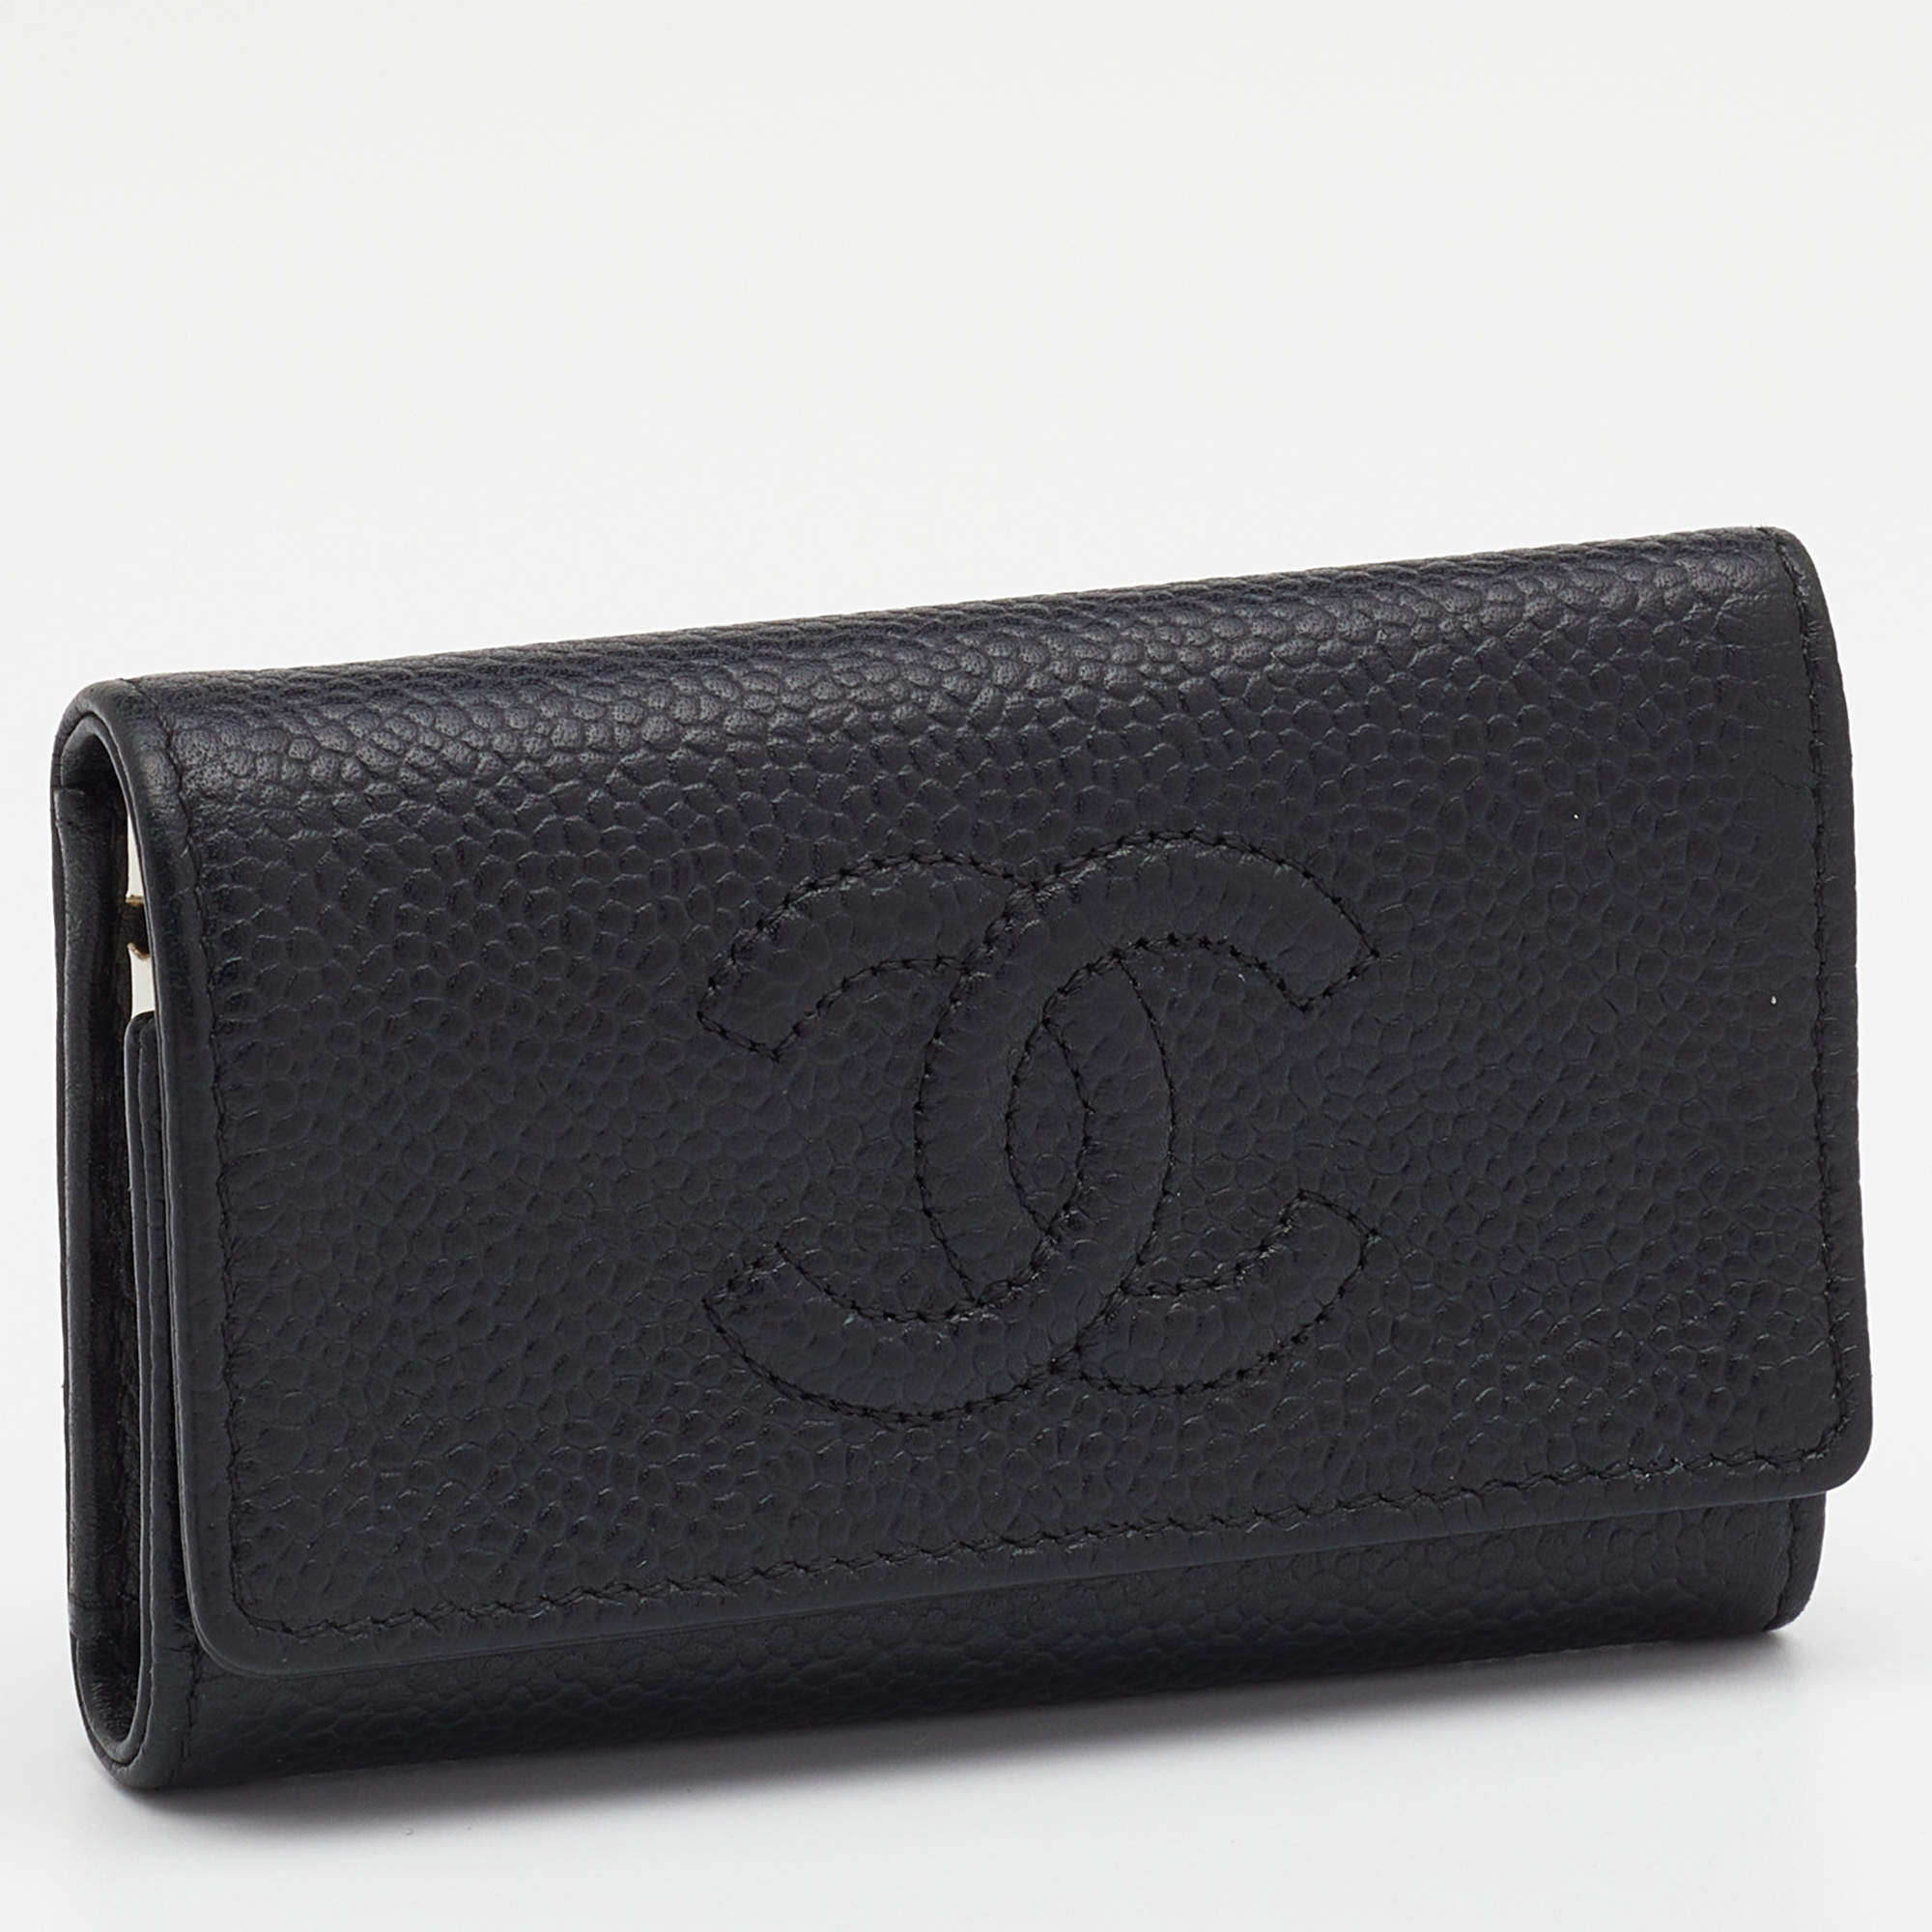 Chanel Black Caviar Leather CC 6 Key Holder